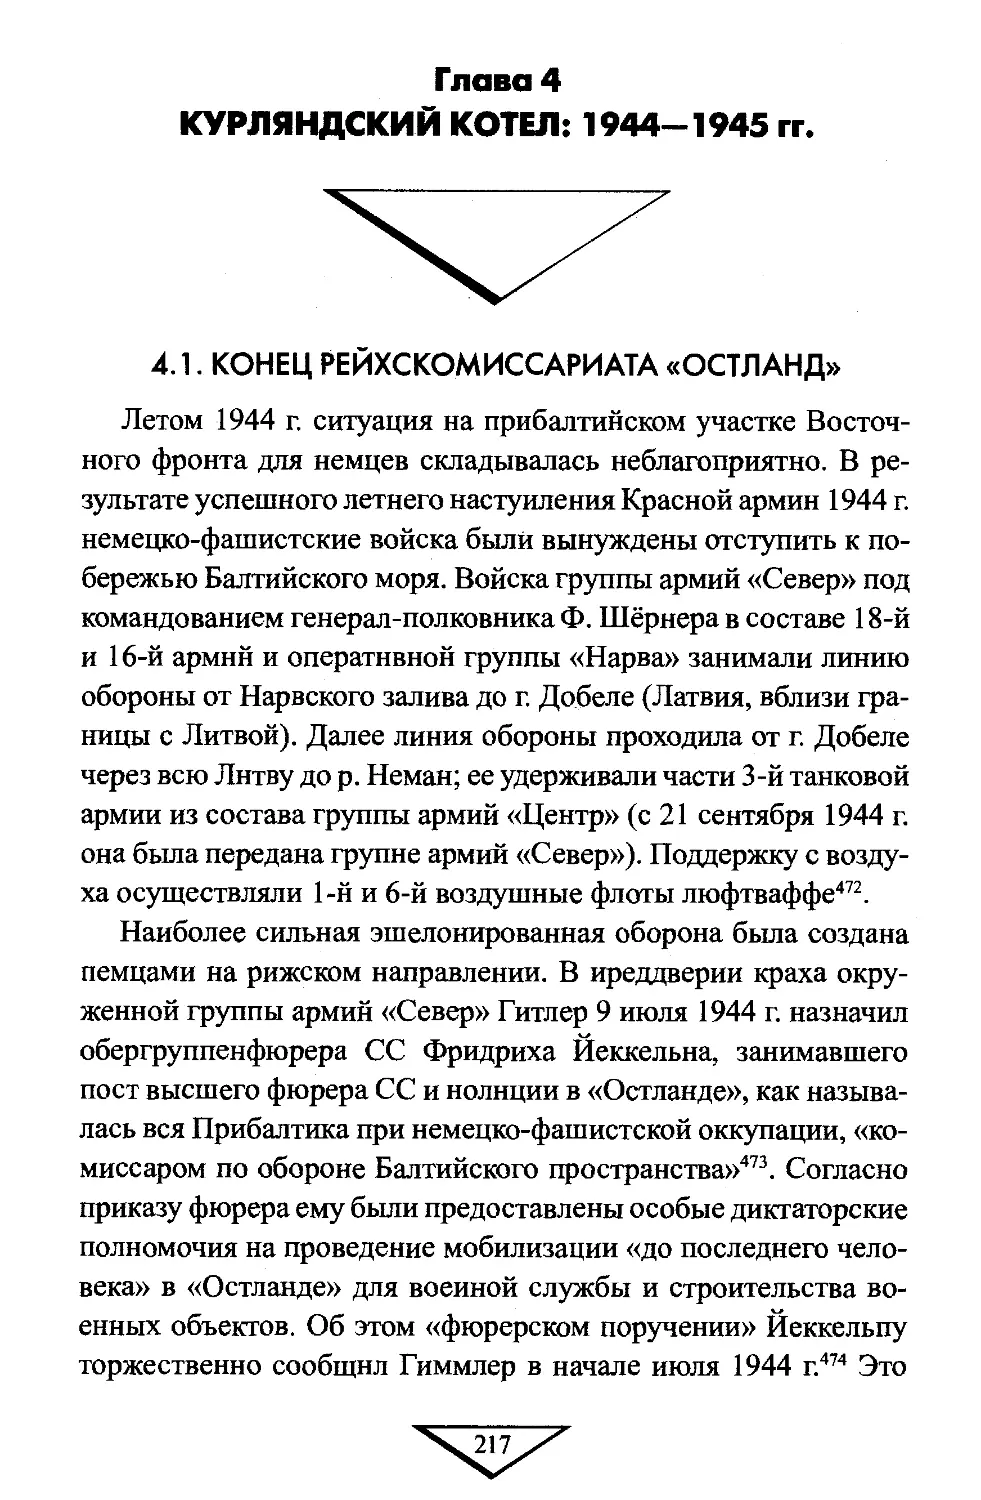 ГЛАВА 4. КУРЛЯНДСКИЙ КОТЁЛ: 1944—1945 гг